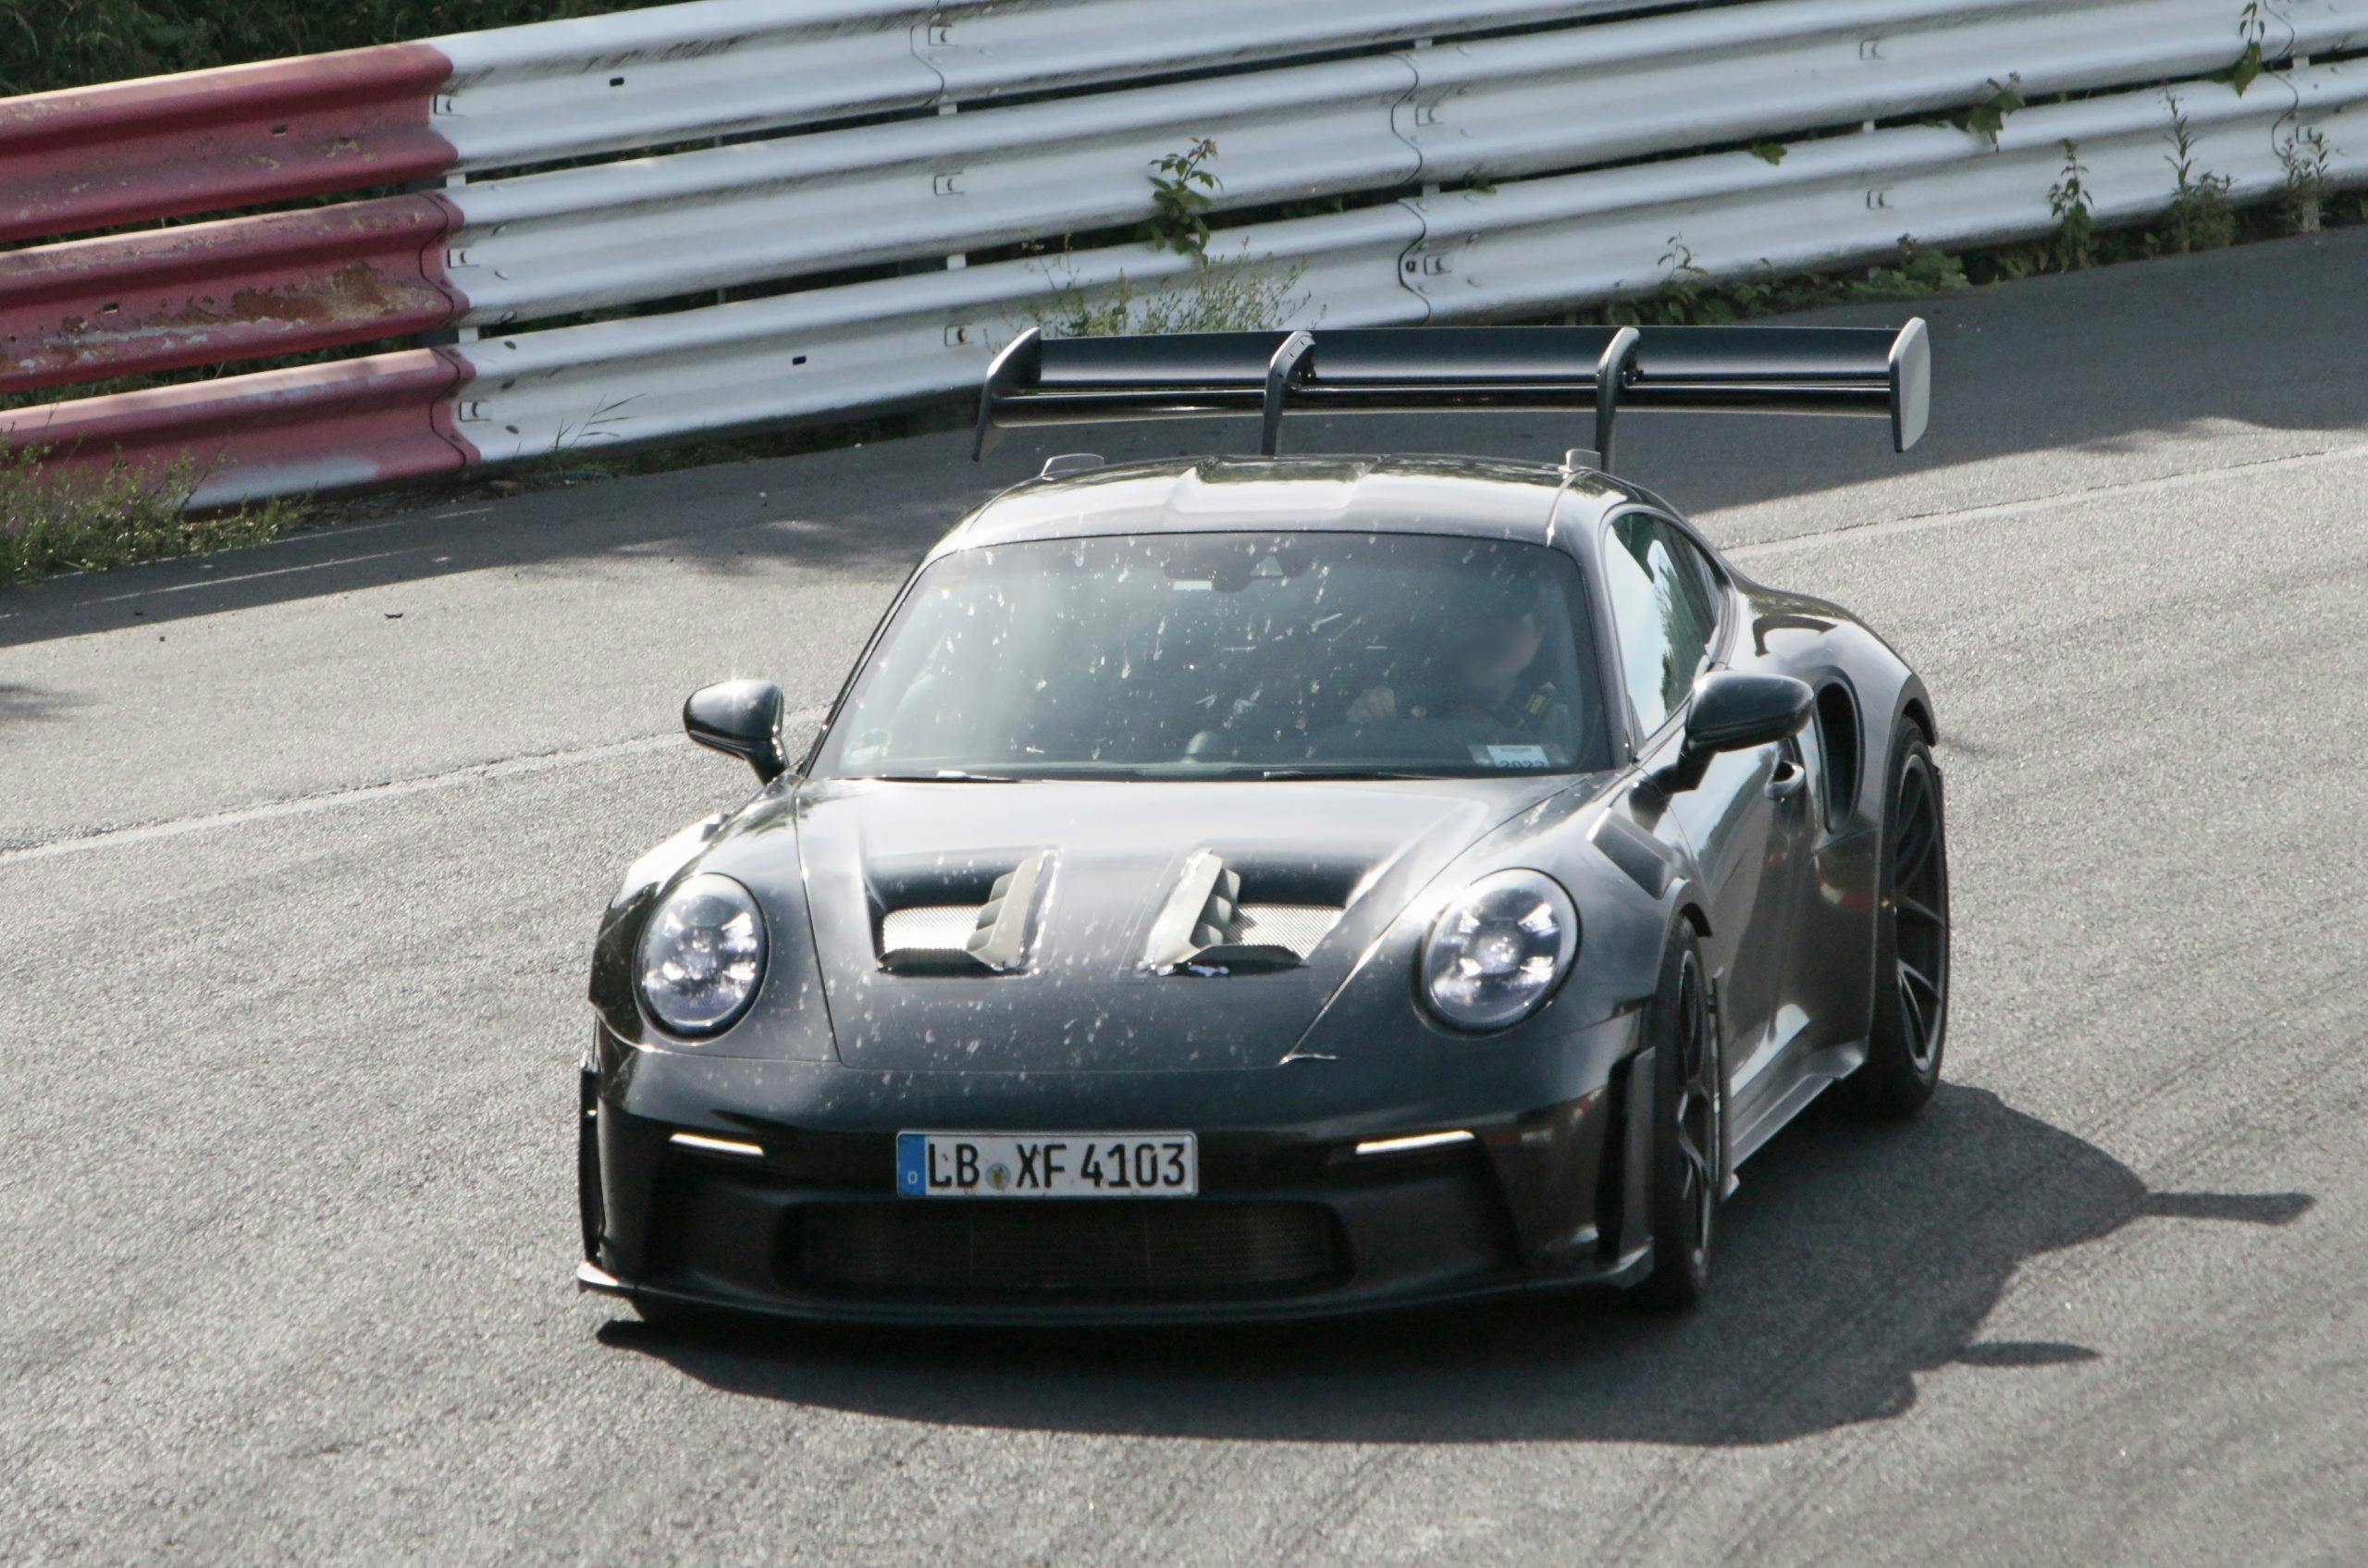 Porsche 911 GT3 RS Spy Shots exterior high front end